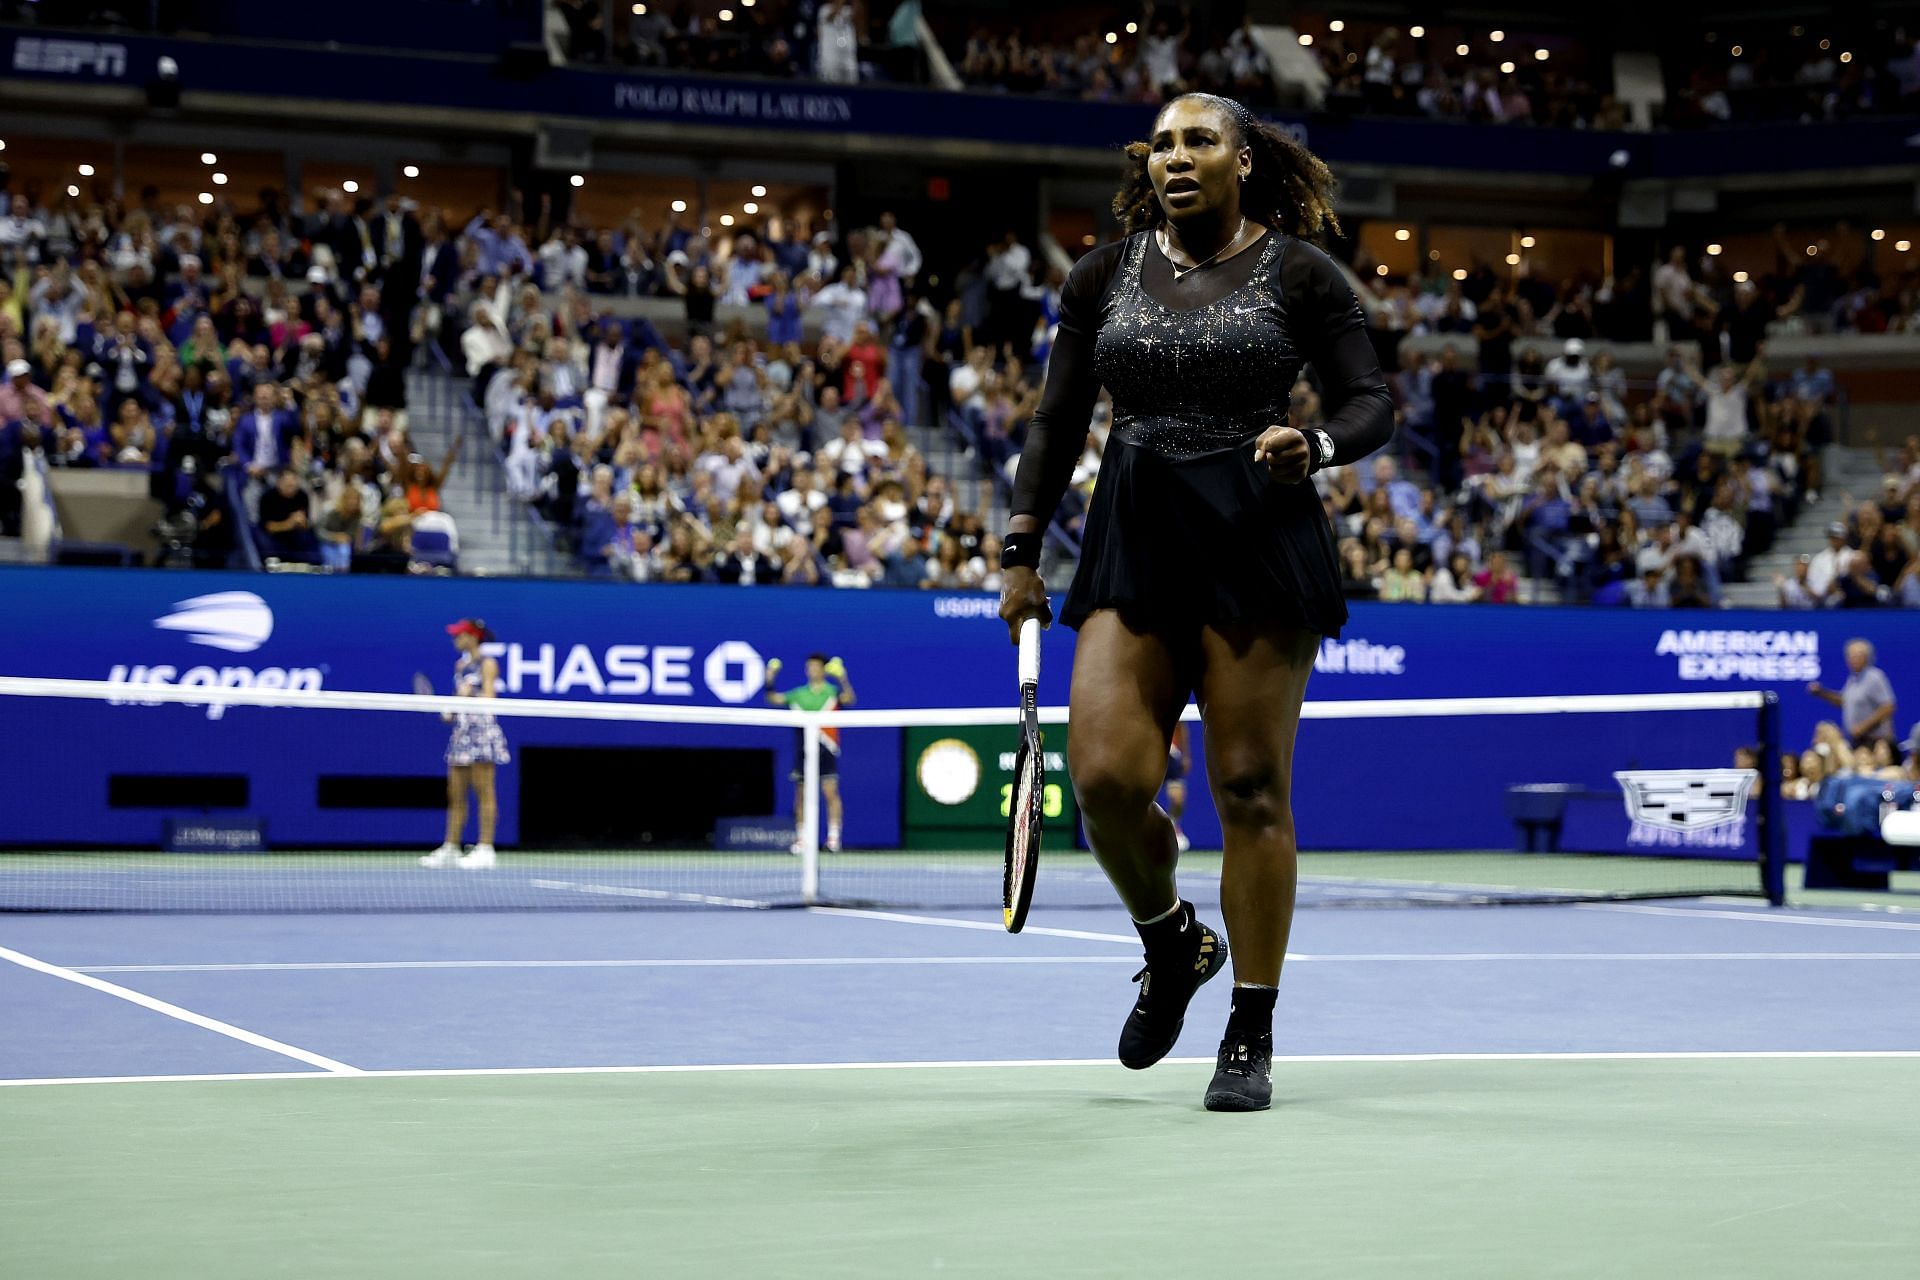 Serena williams during her third-round match at US Open 2022